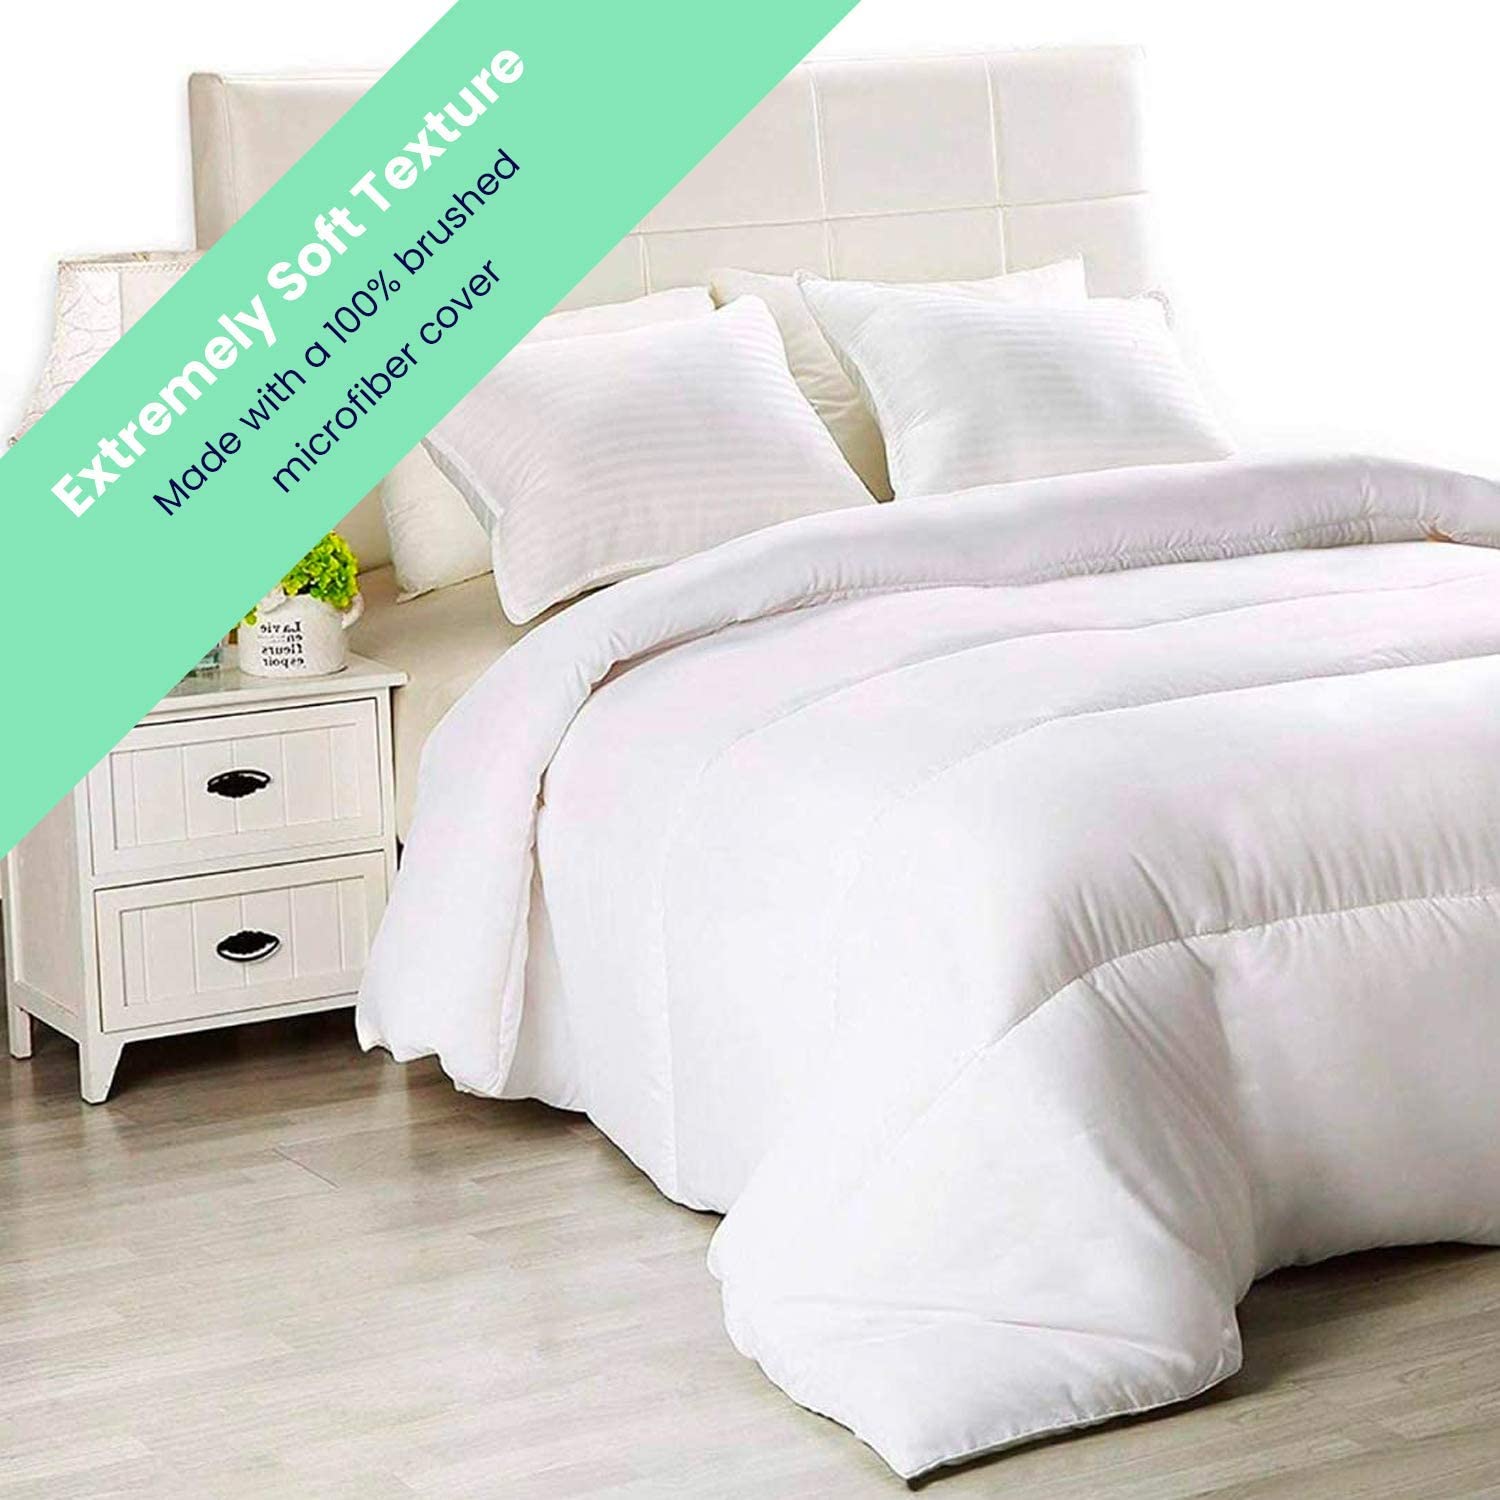 Celeep Thin Duvet Insert (86"x 86") - White, All Season Down Alternative Comforter Insert, Soft, Plush Microfiber Fill, Machine Washable, Queen Size - image 4 of 7